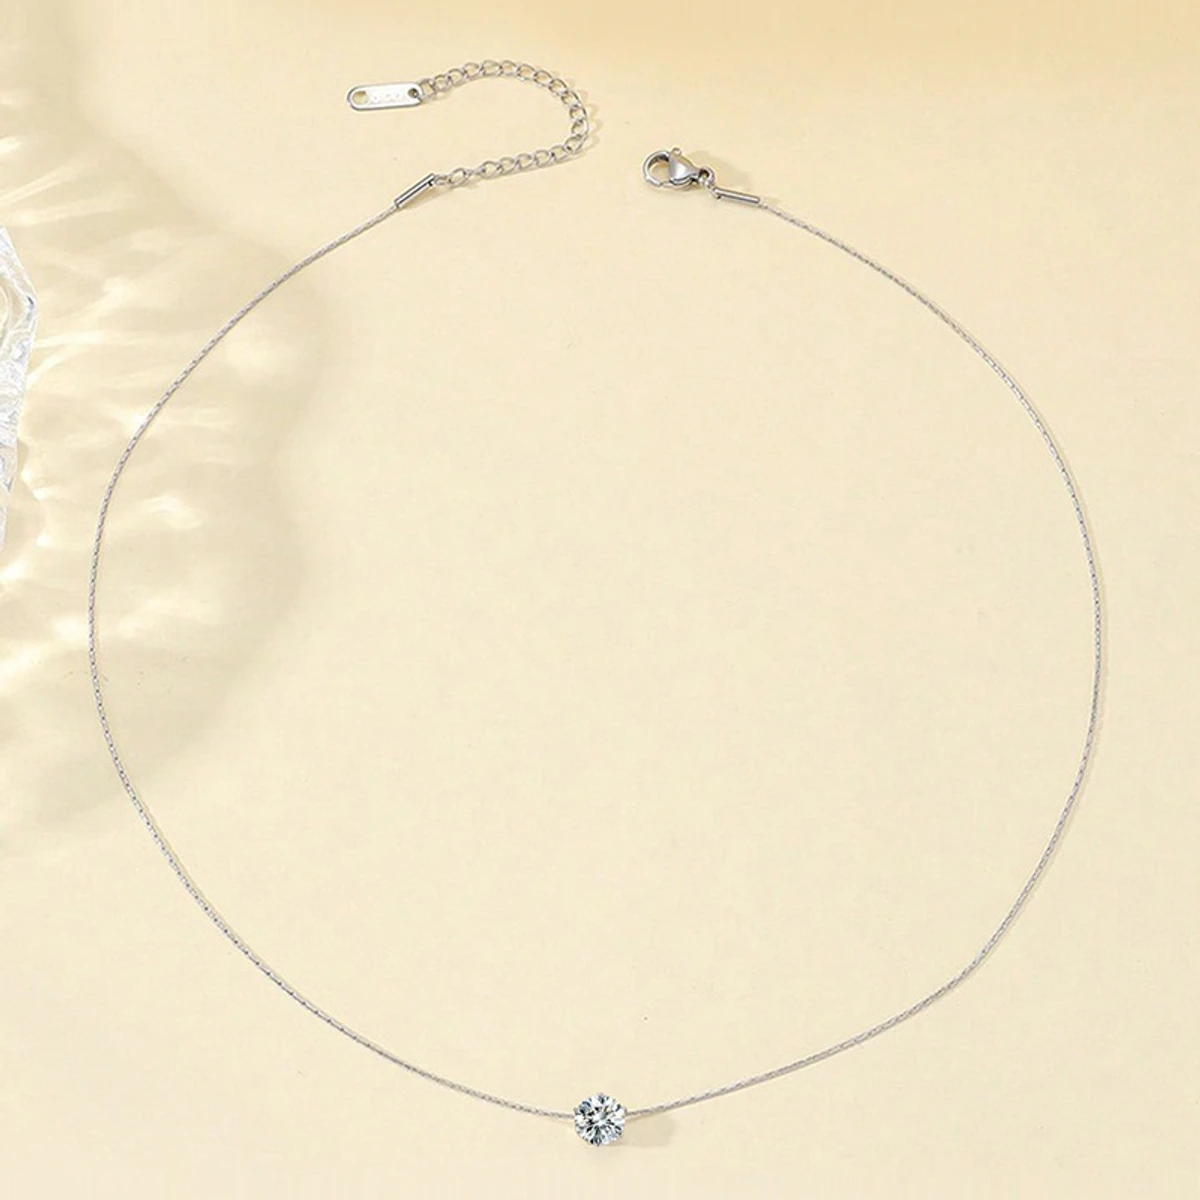 Minimalist Choker Neck Chains Fashion Delicate Jewelry Gift For Women